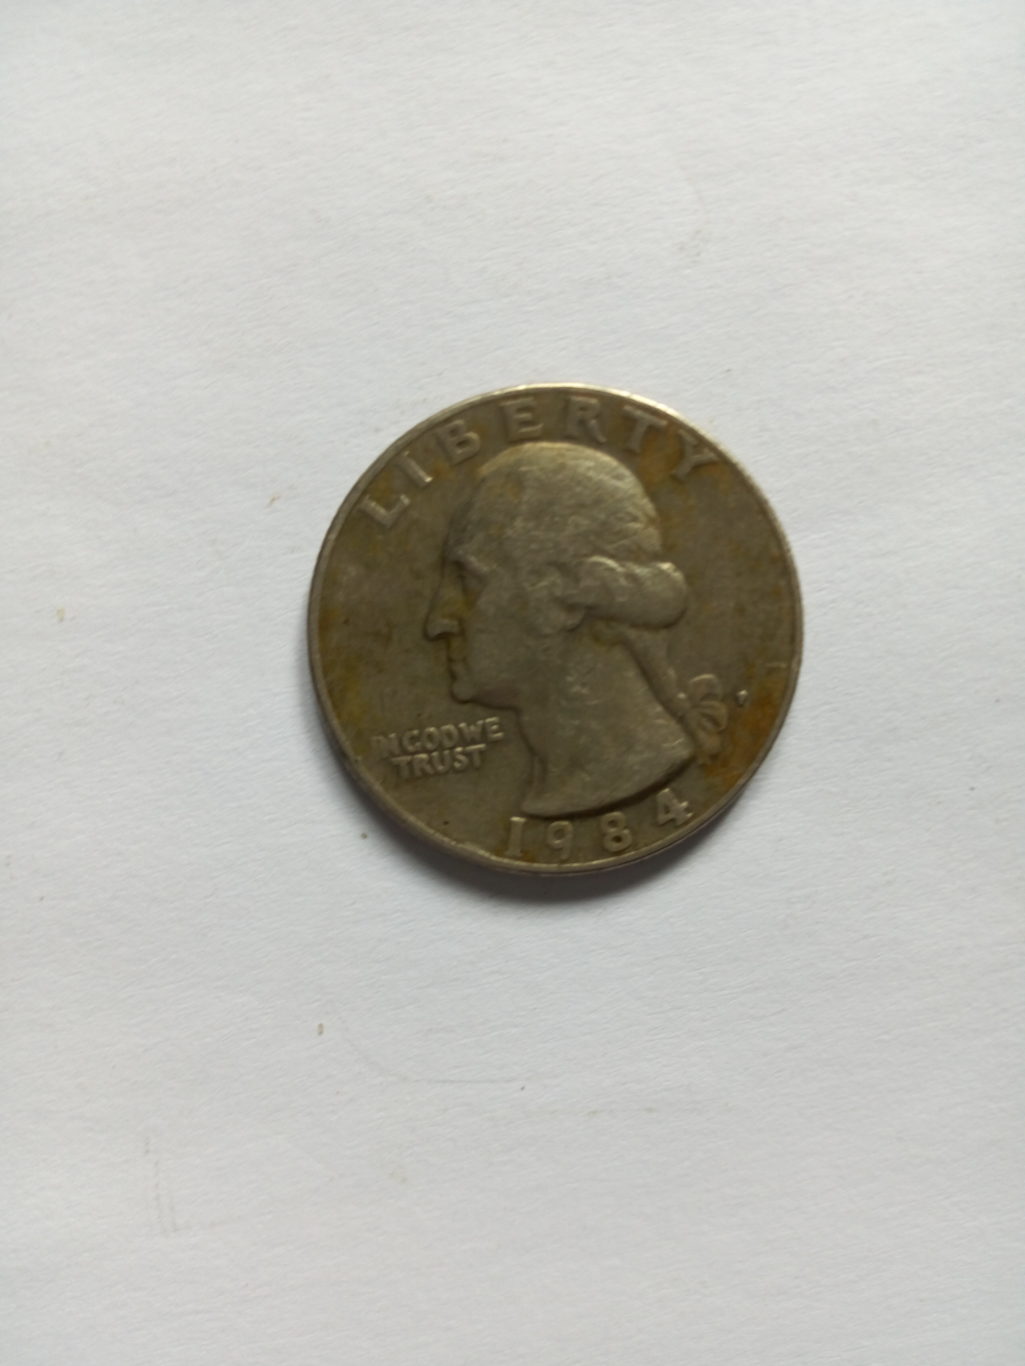 1984_quarter dollar